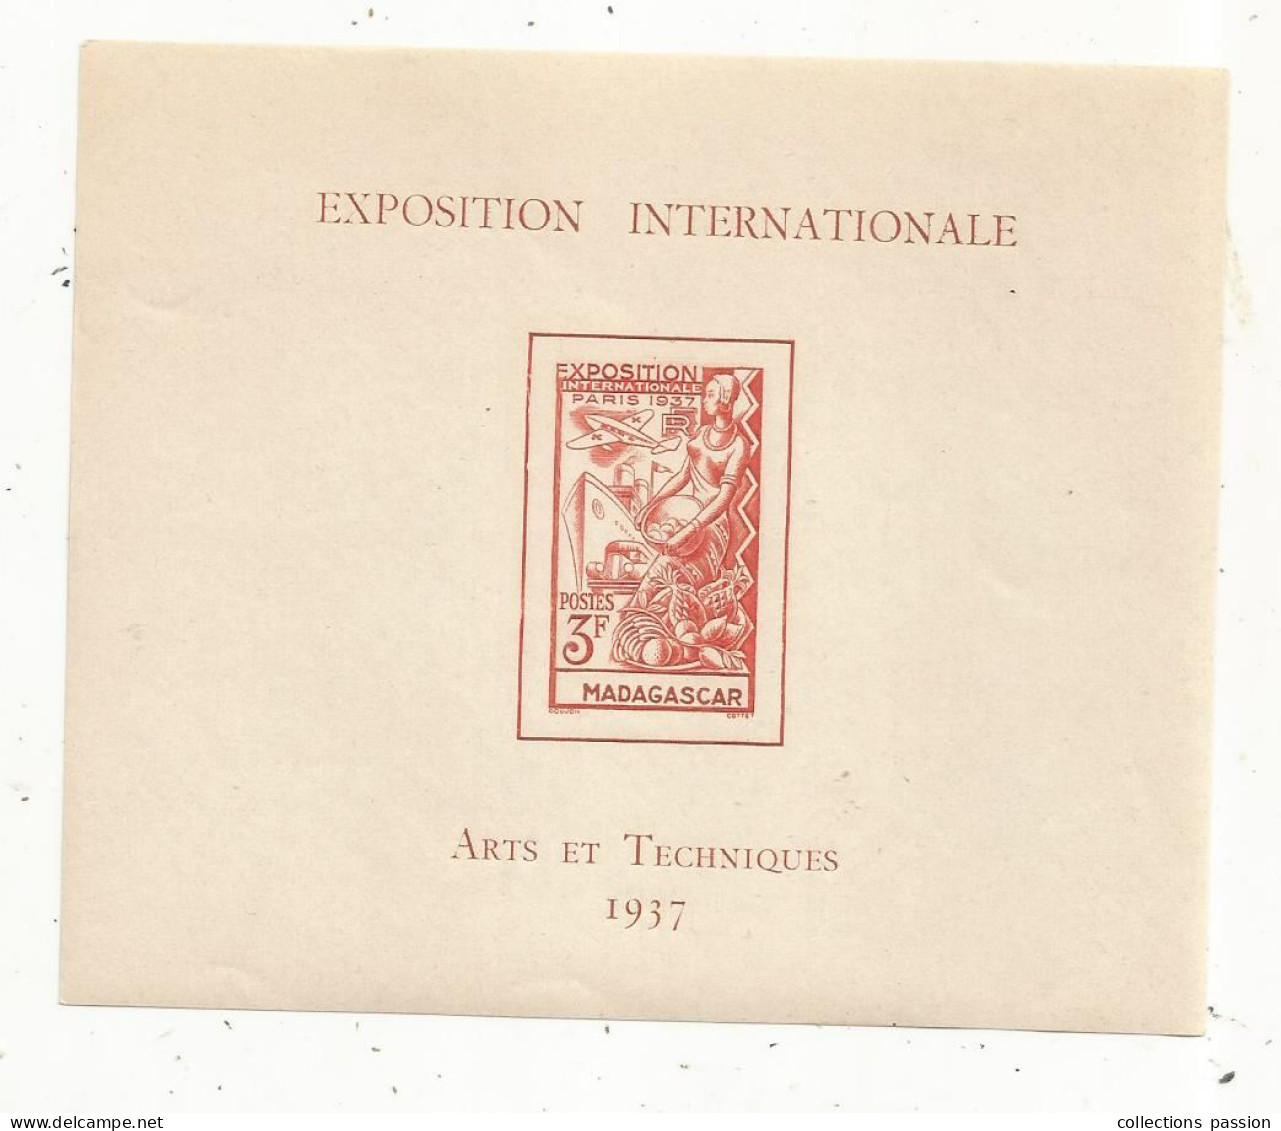 Exposition Internationale , ARTS ET TECHNIQUES 1937 , MADAGASCAR ,3 F - Covers & Documents